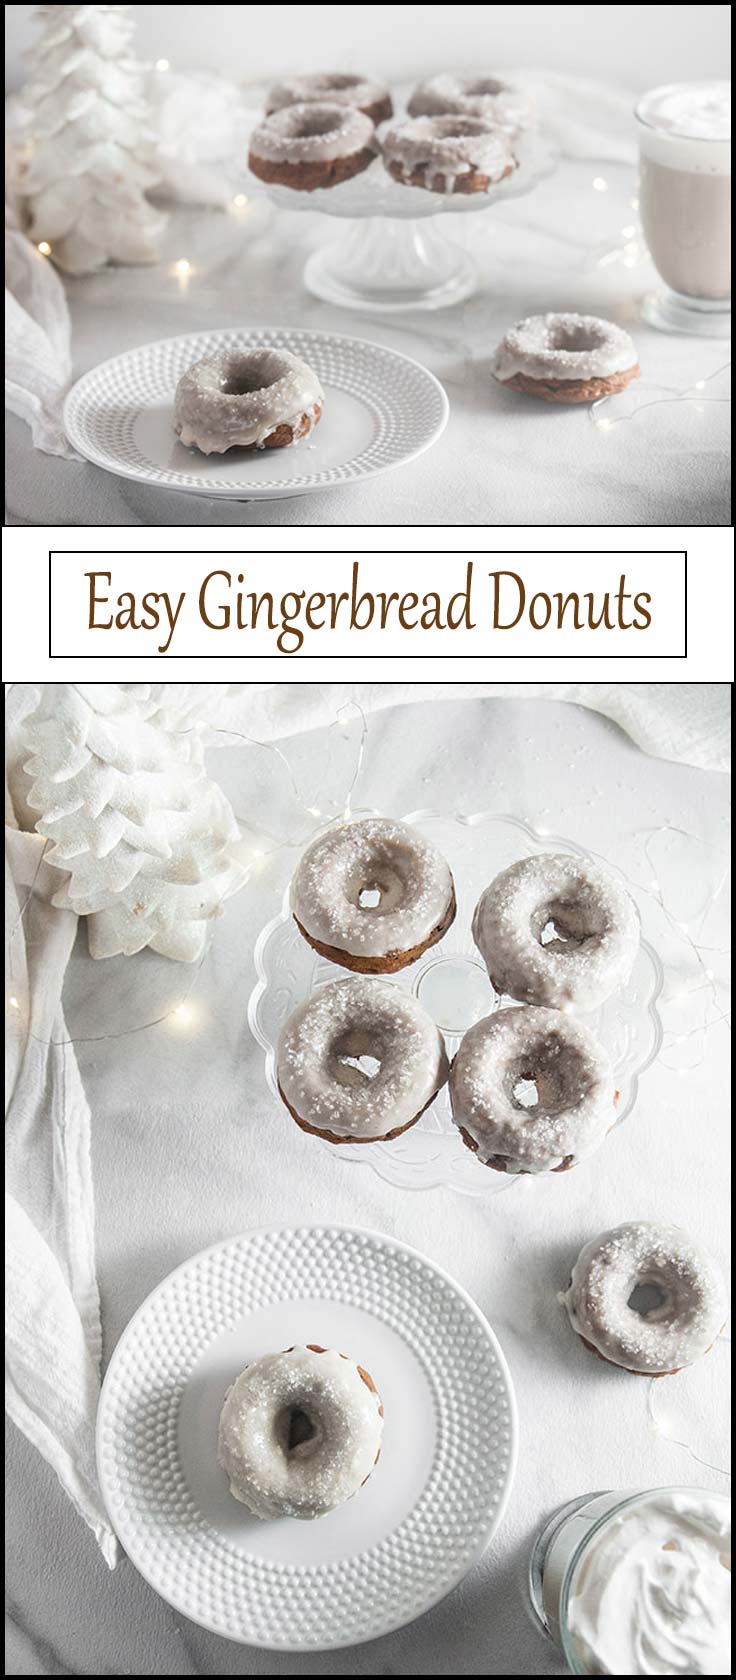 Easy Gingerbread Donuts from www.seasonedsprinkles.com